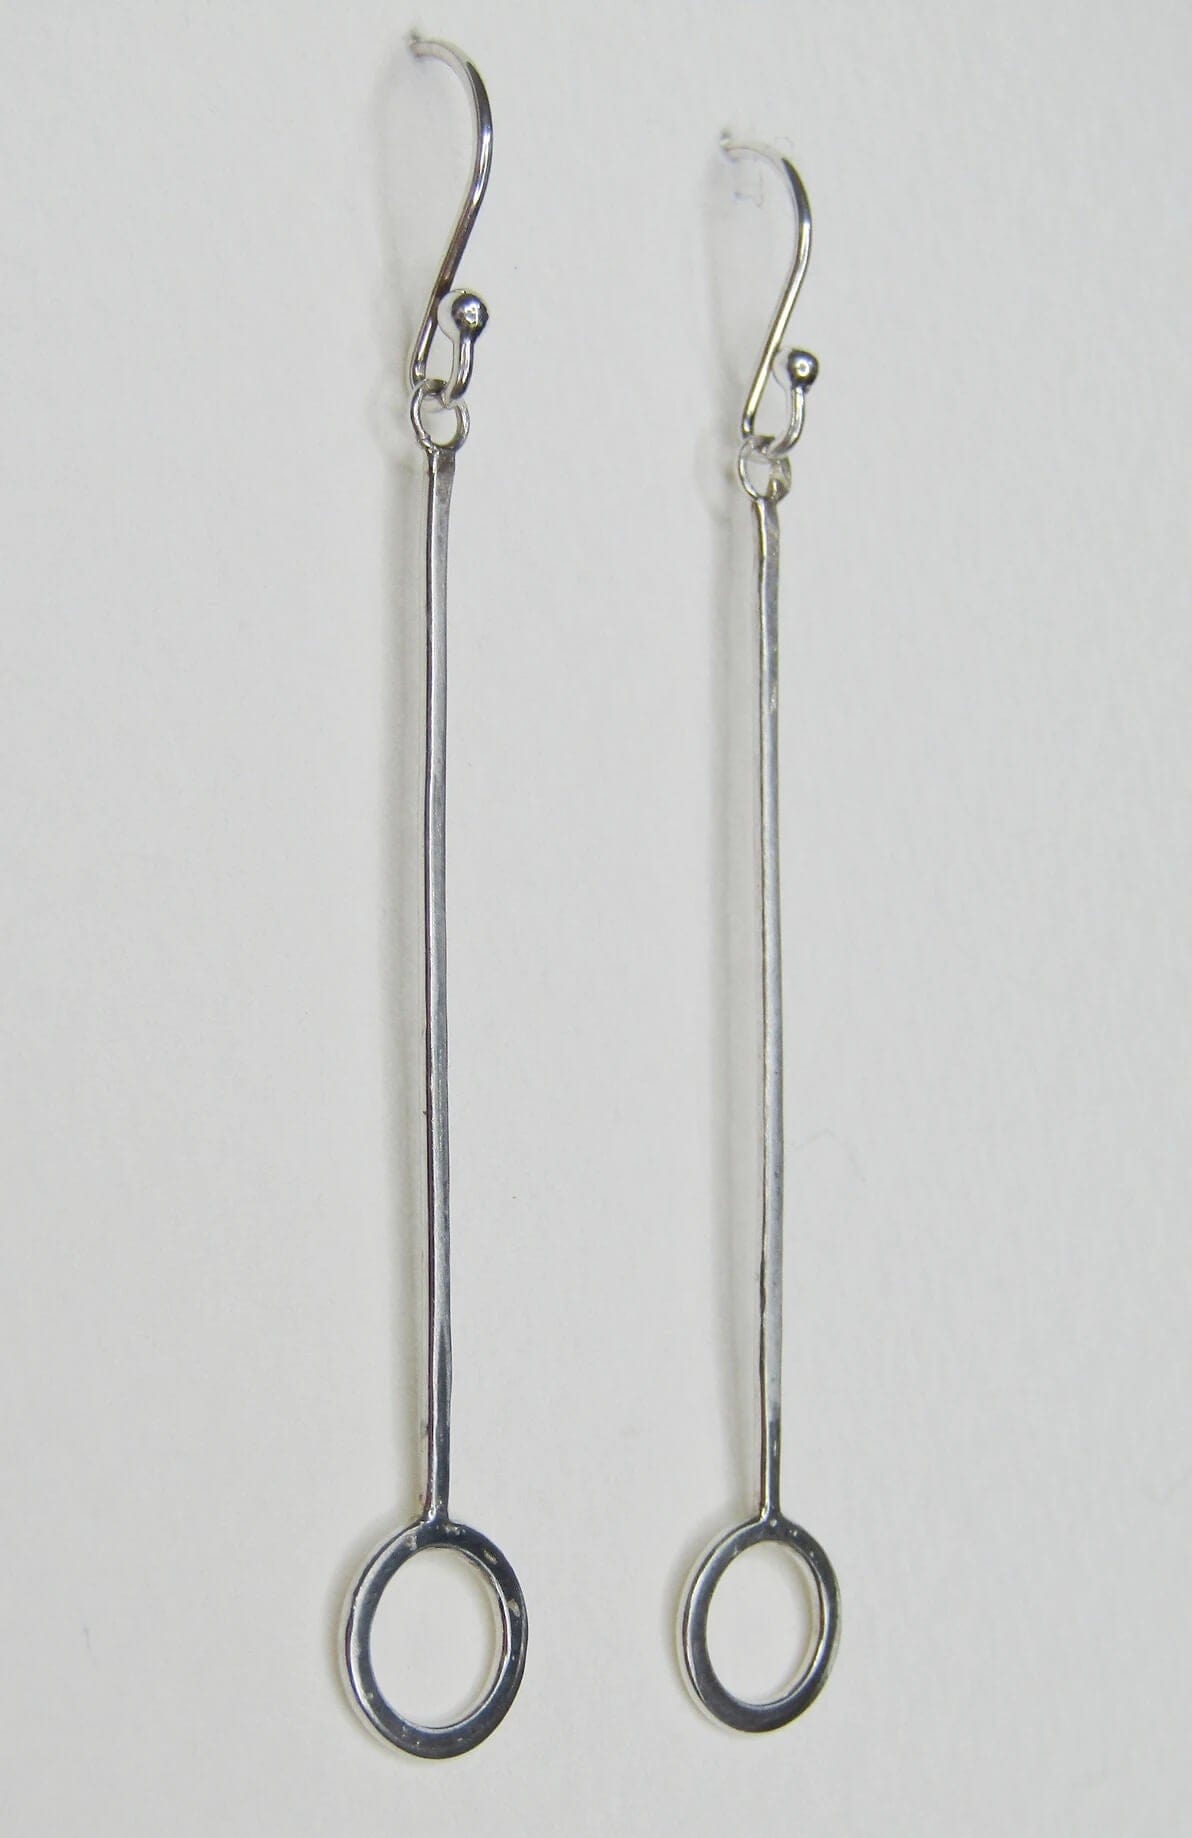 Amelia Stone Jewellery Earrings 'Knot' Dangle Earrings - Sterling Silver (various styles)